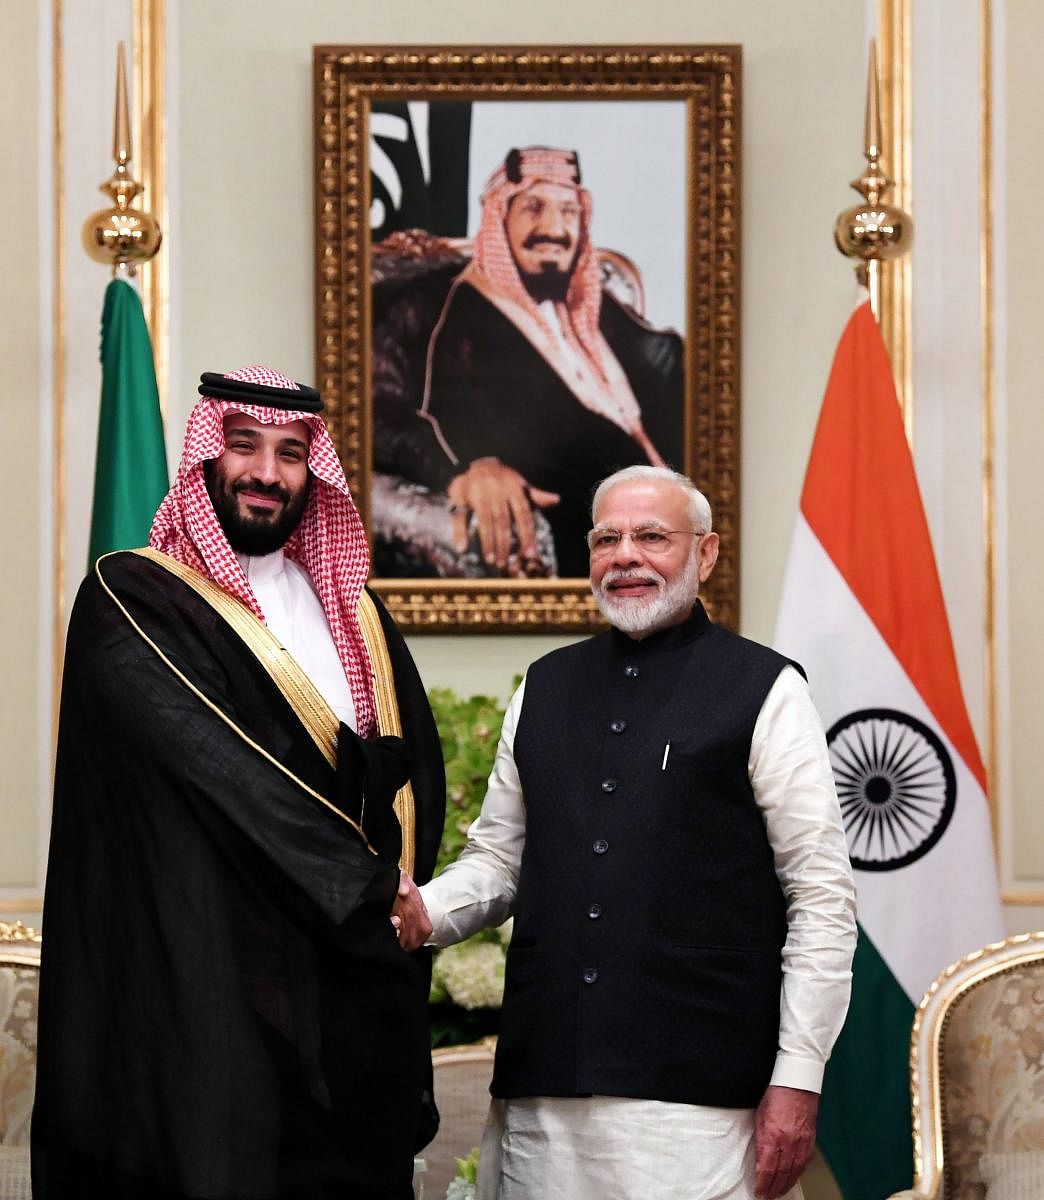 Prime Minister Narendra Modi and Saudi Arabia's Crown Prince Mohammed bin Salman shaking hands in Riyadh. (Photo by Handout / PIB / AFP)